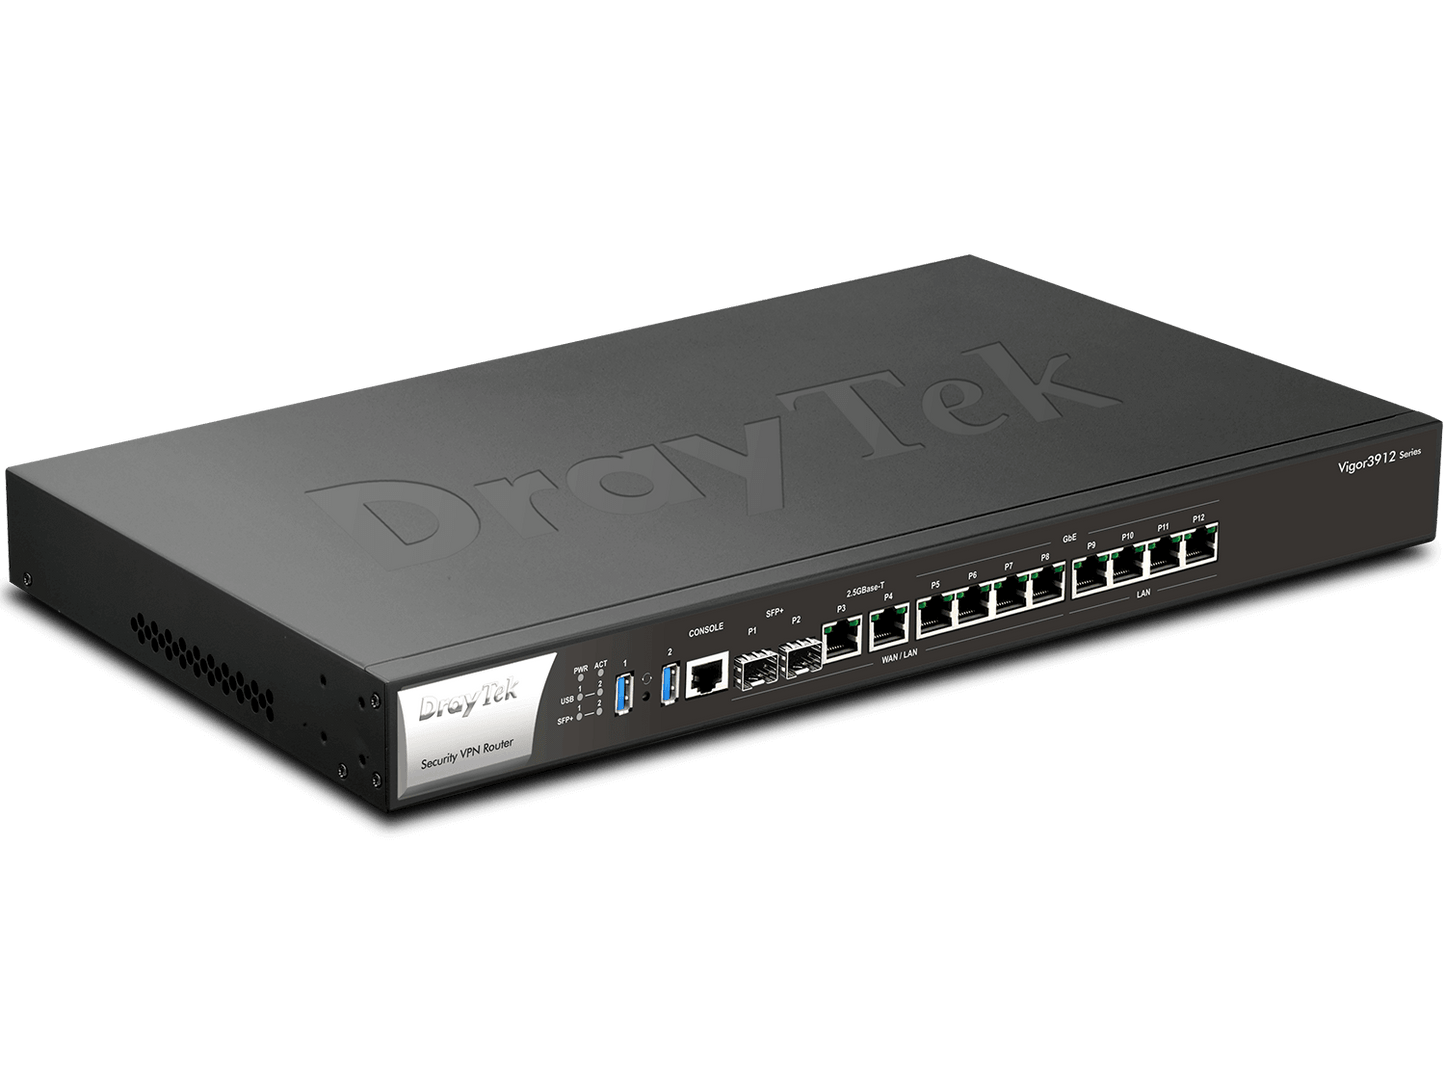 Draytek 3912 8 Port MultiWAN Broadband VPN Router QuadCore Processor Right View